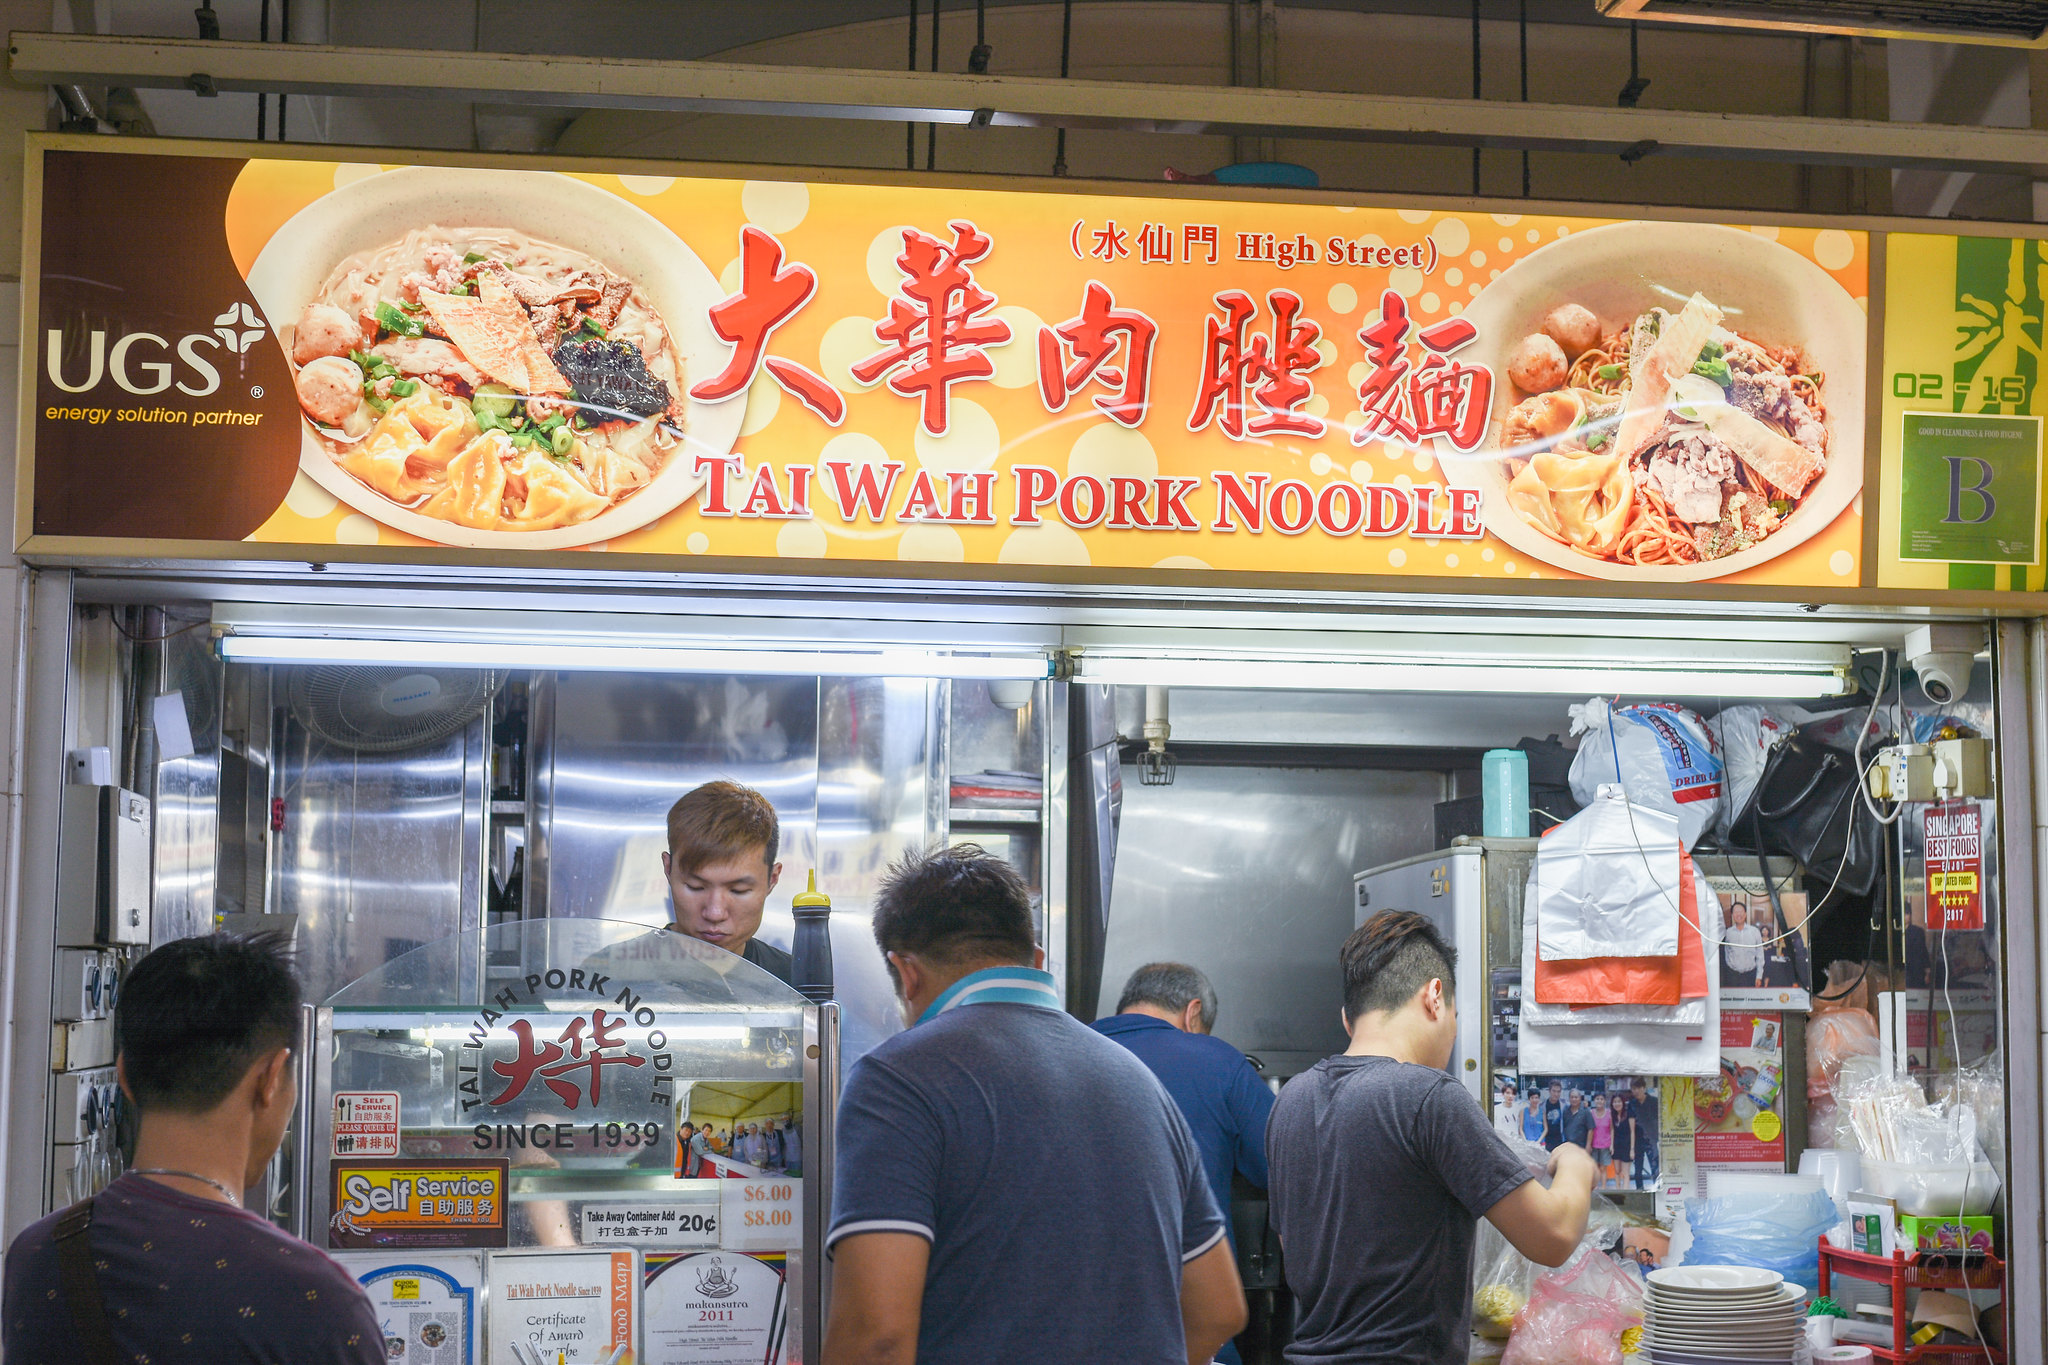 High Street Tai Wah Pork Noodle DSC_6432-1